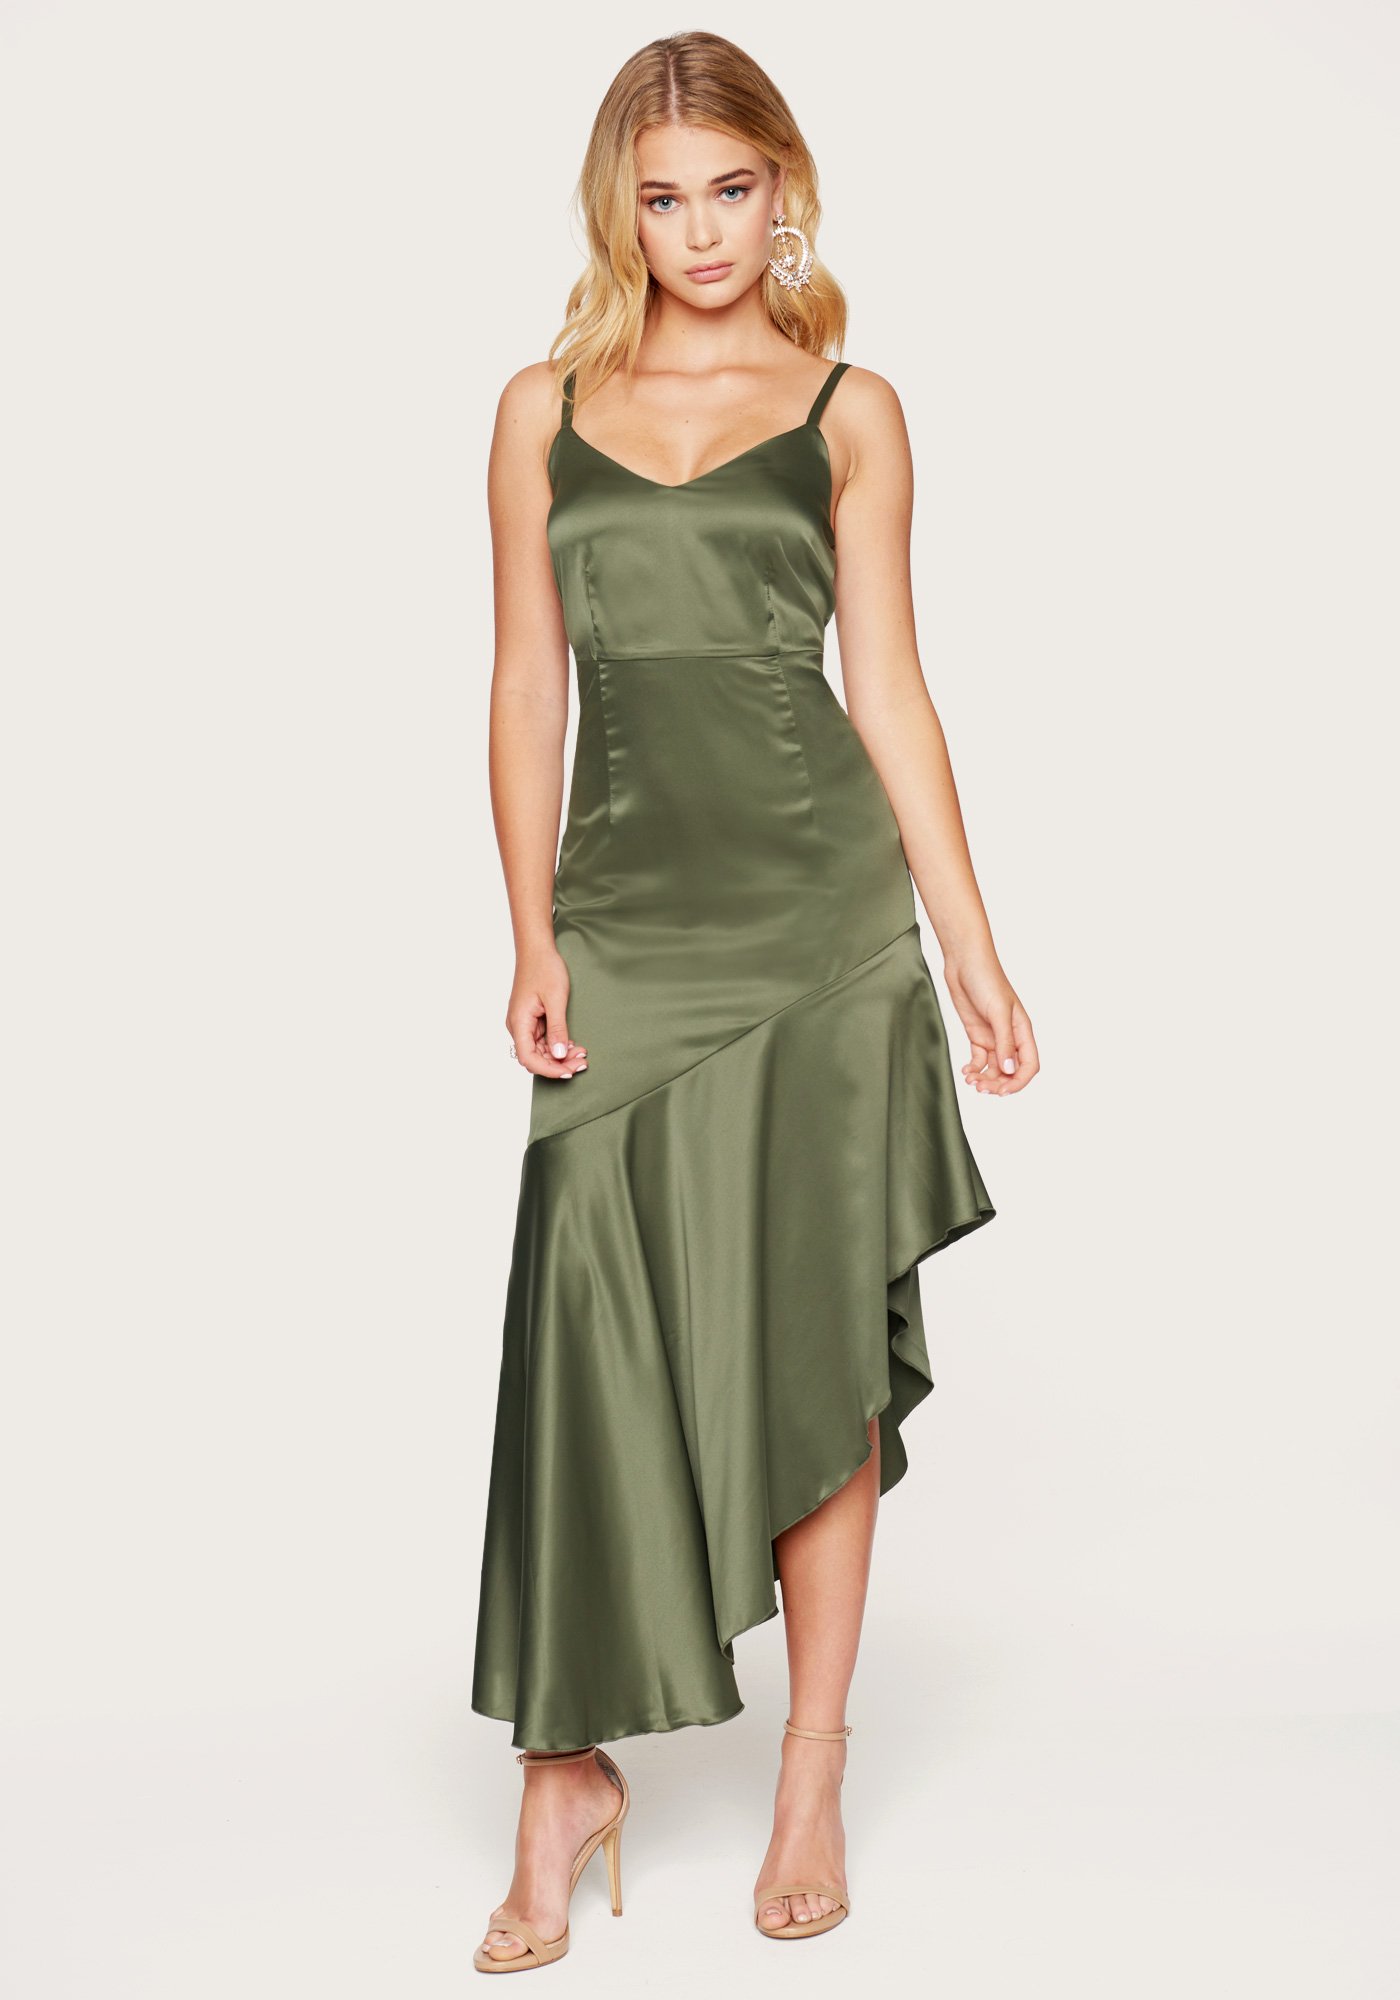 Bebe Women's Angled Ruffle Midi Dress, Size 4 in Dusty Olive Spandex